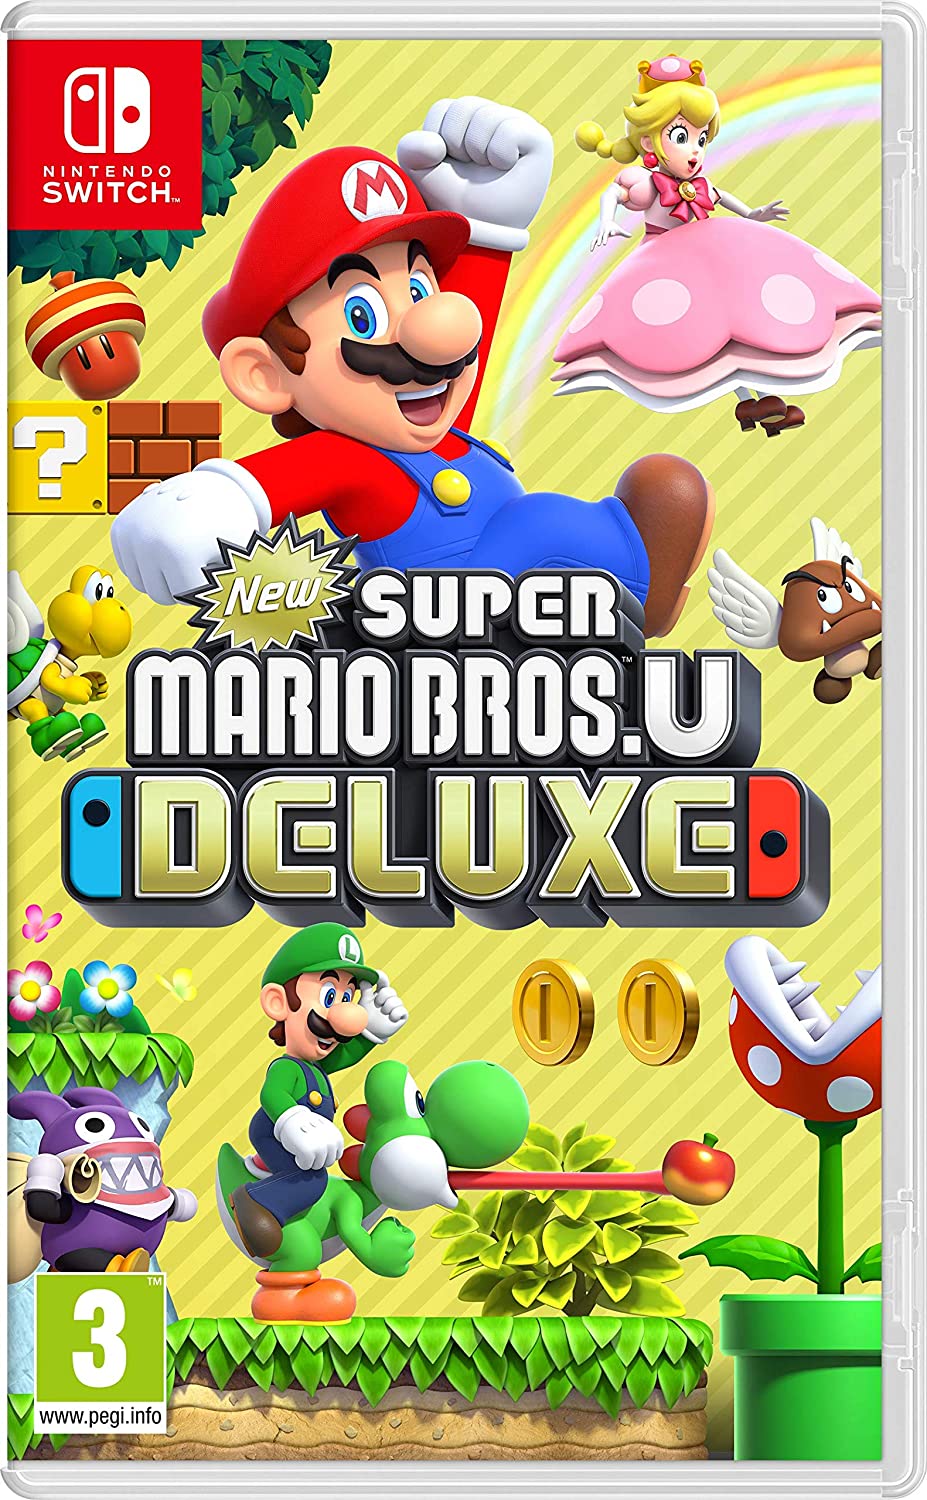 Super Mario Bros. U Deluxe cover artwork for Nintendo Switch.